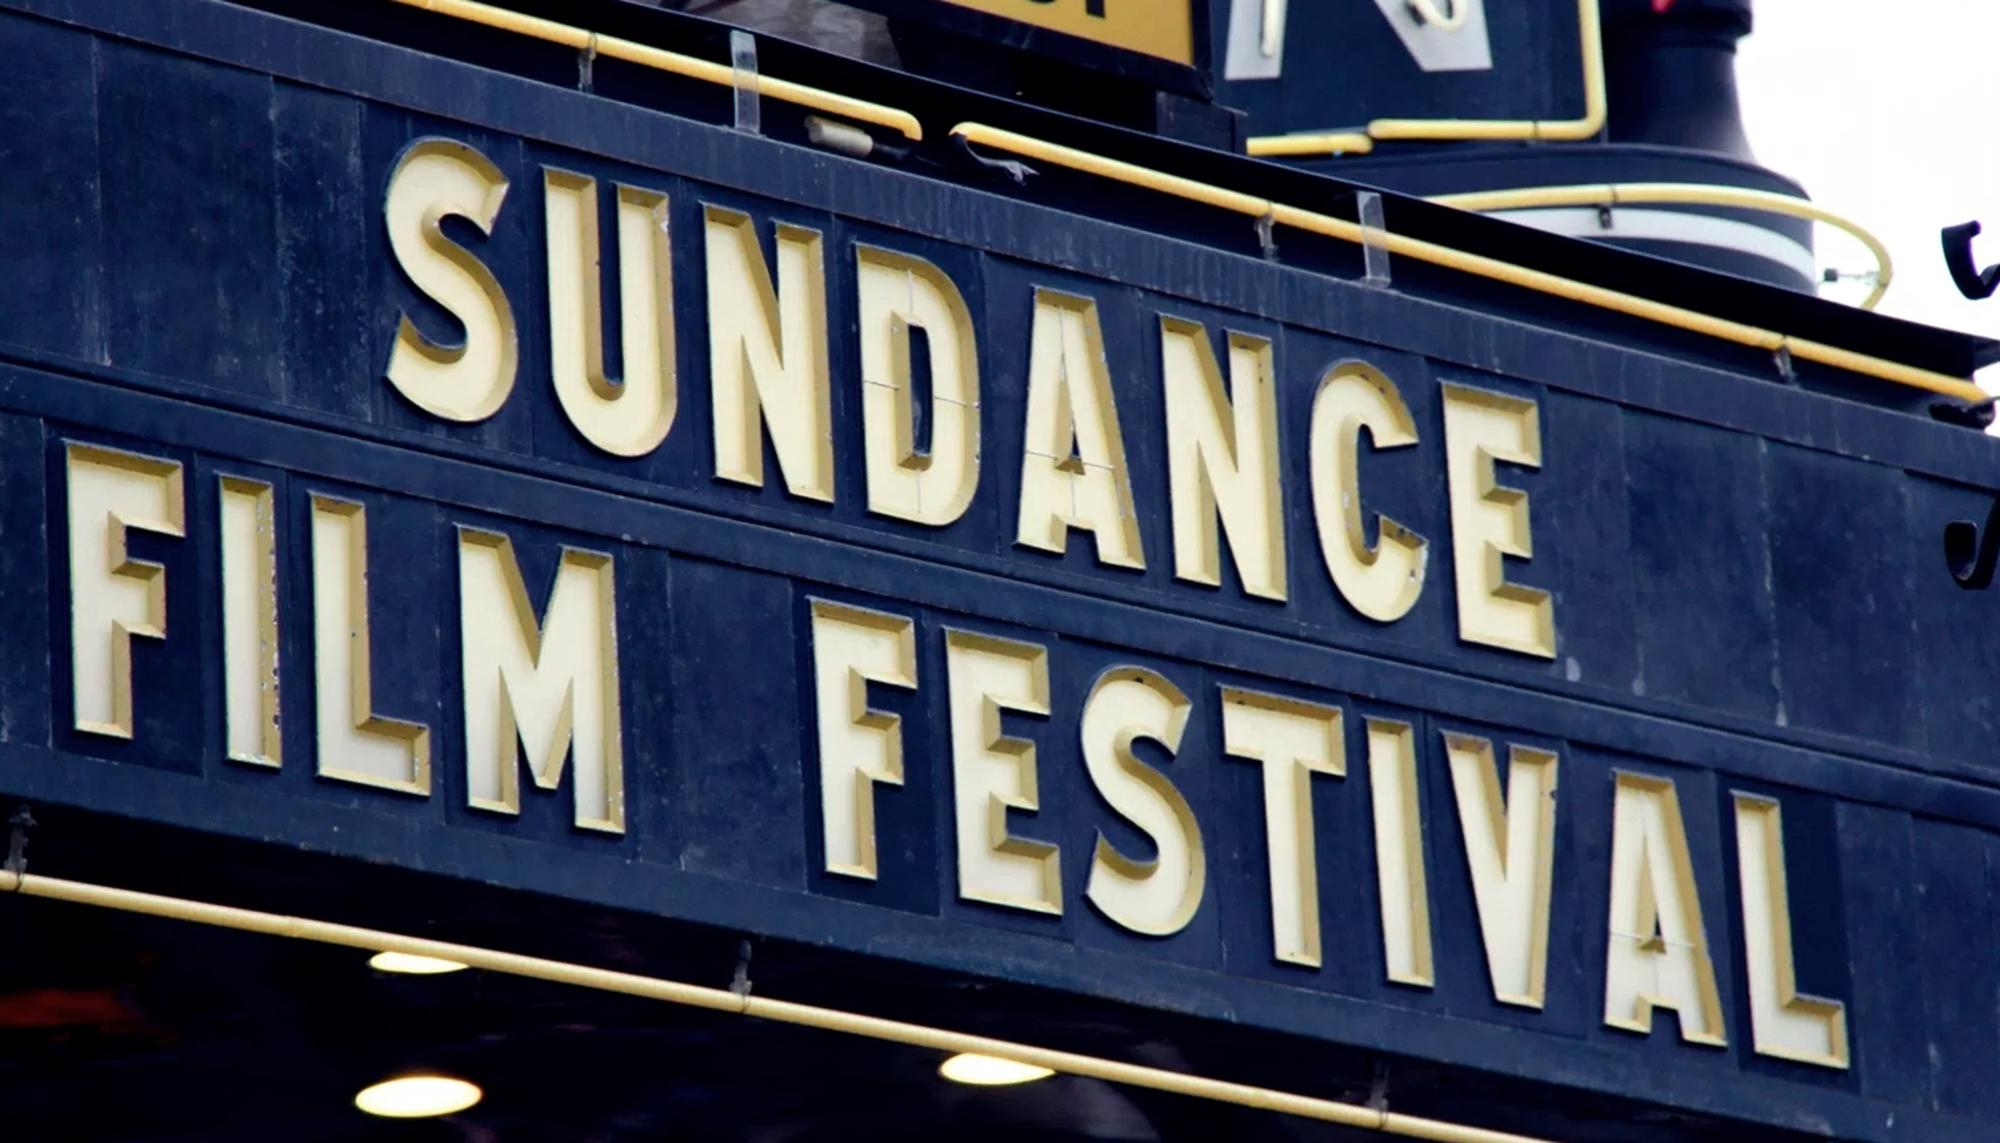 Festival Sundance